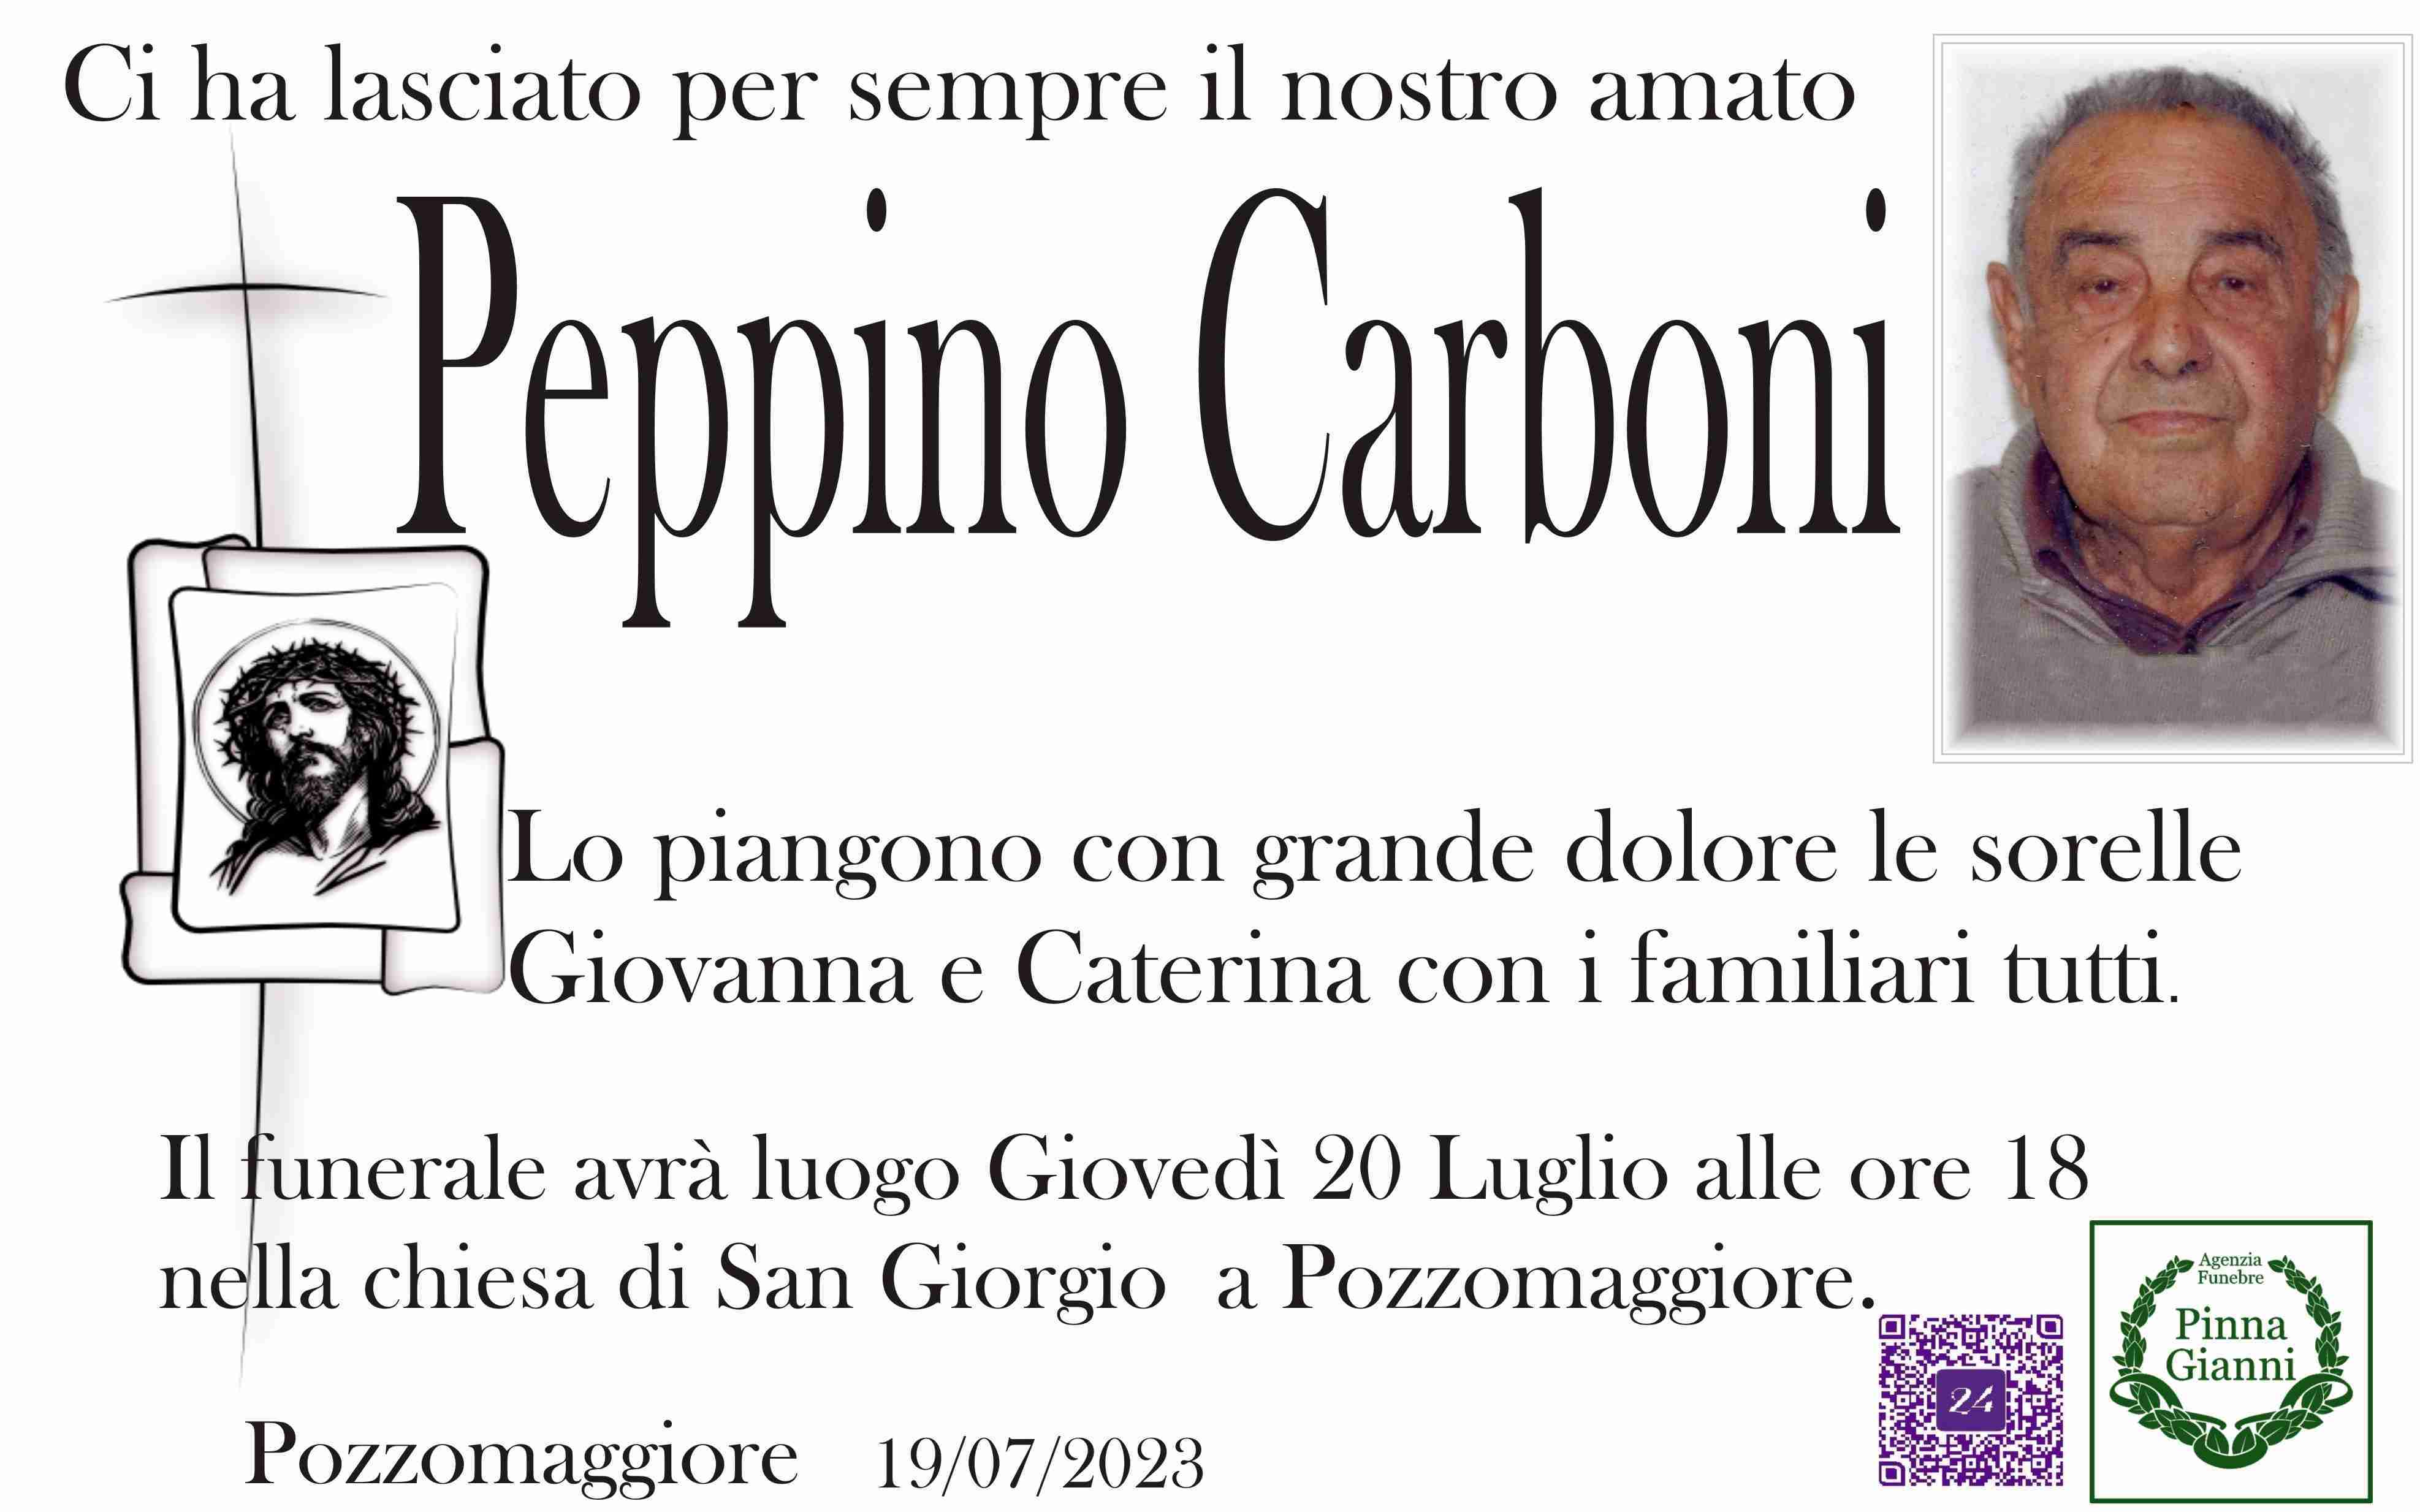 Carboni Giuseppe (Peppino)